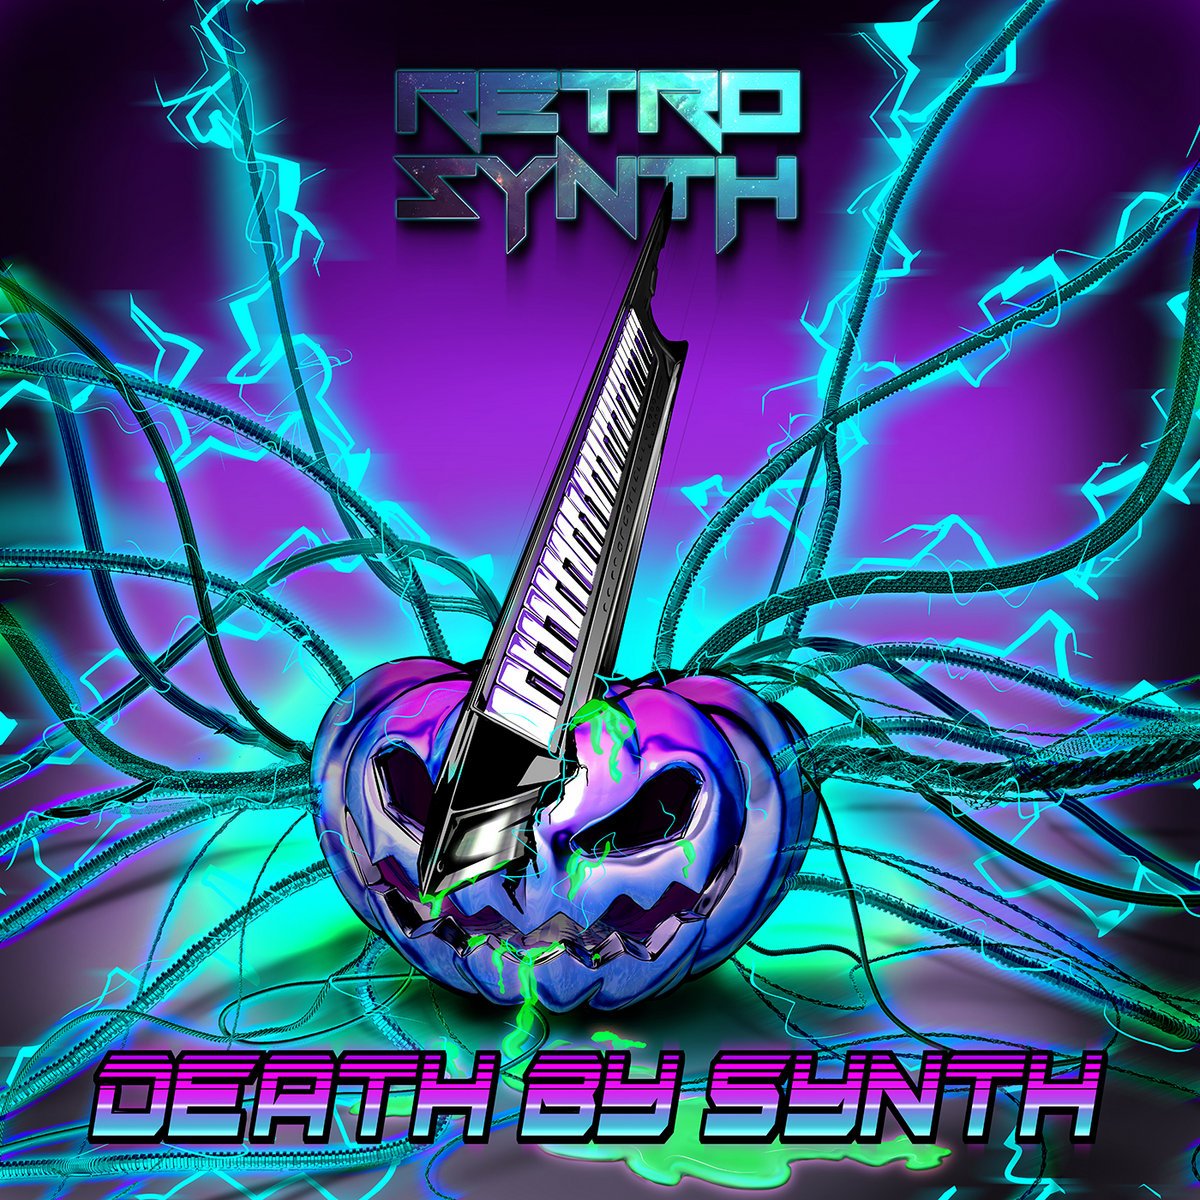 Synth Oxygen альбом. Darksynth обложки. Darksynth Music Art. Darkwave Music. Darksynth